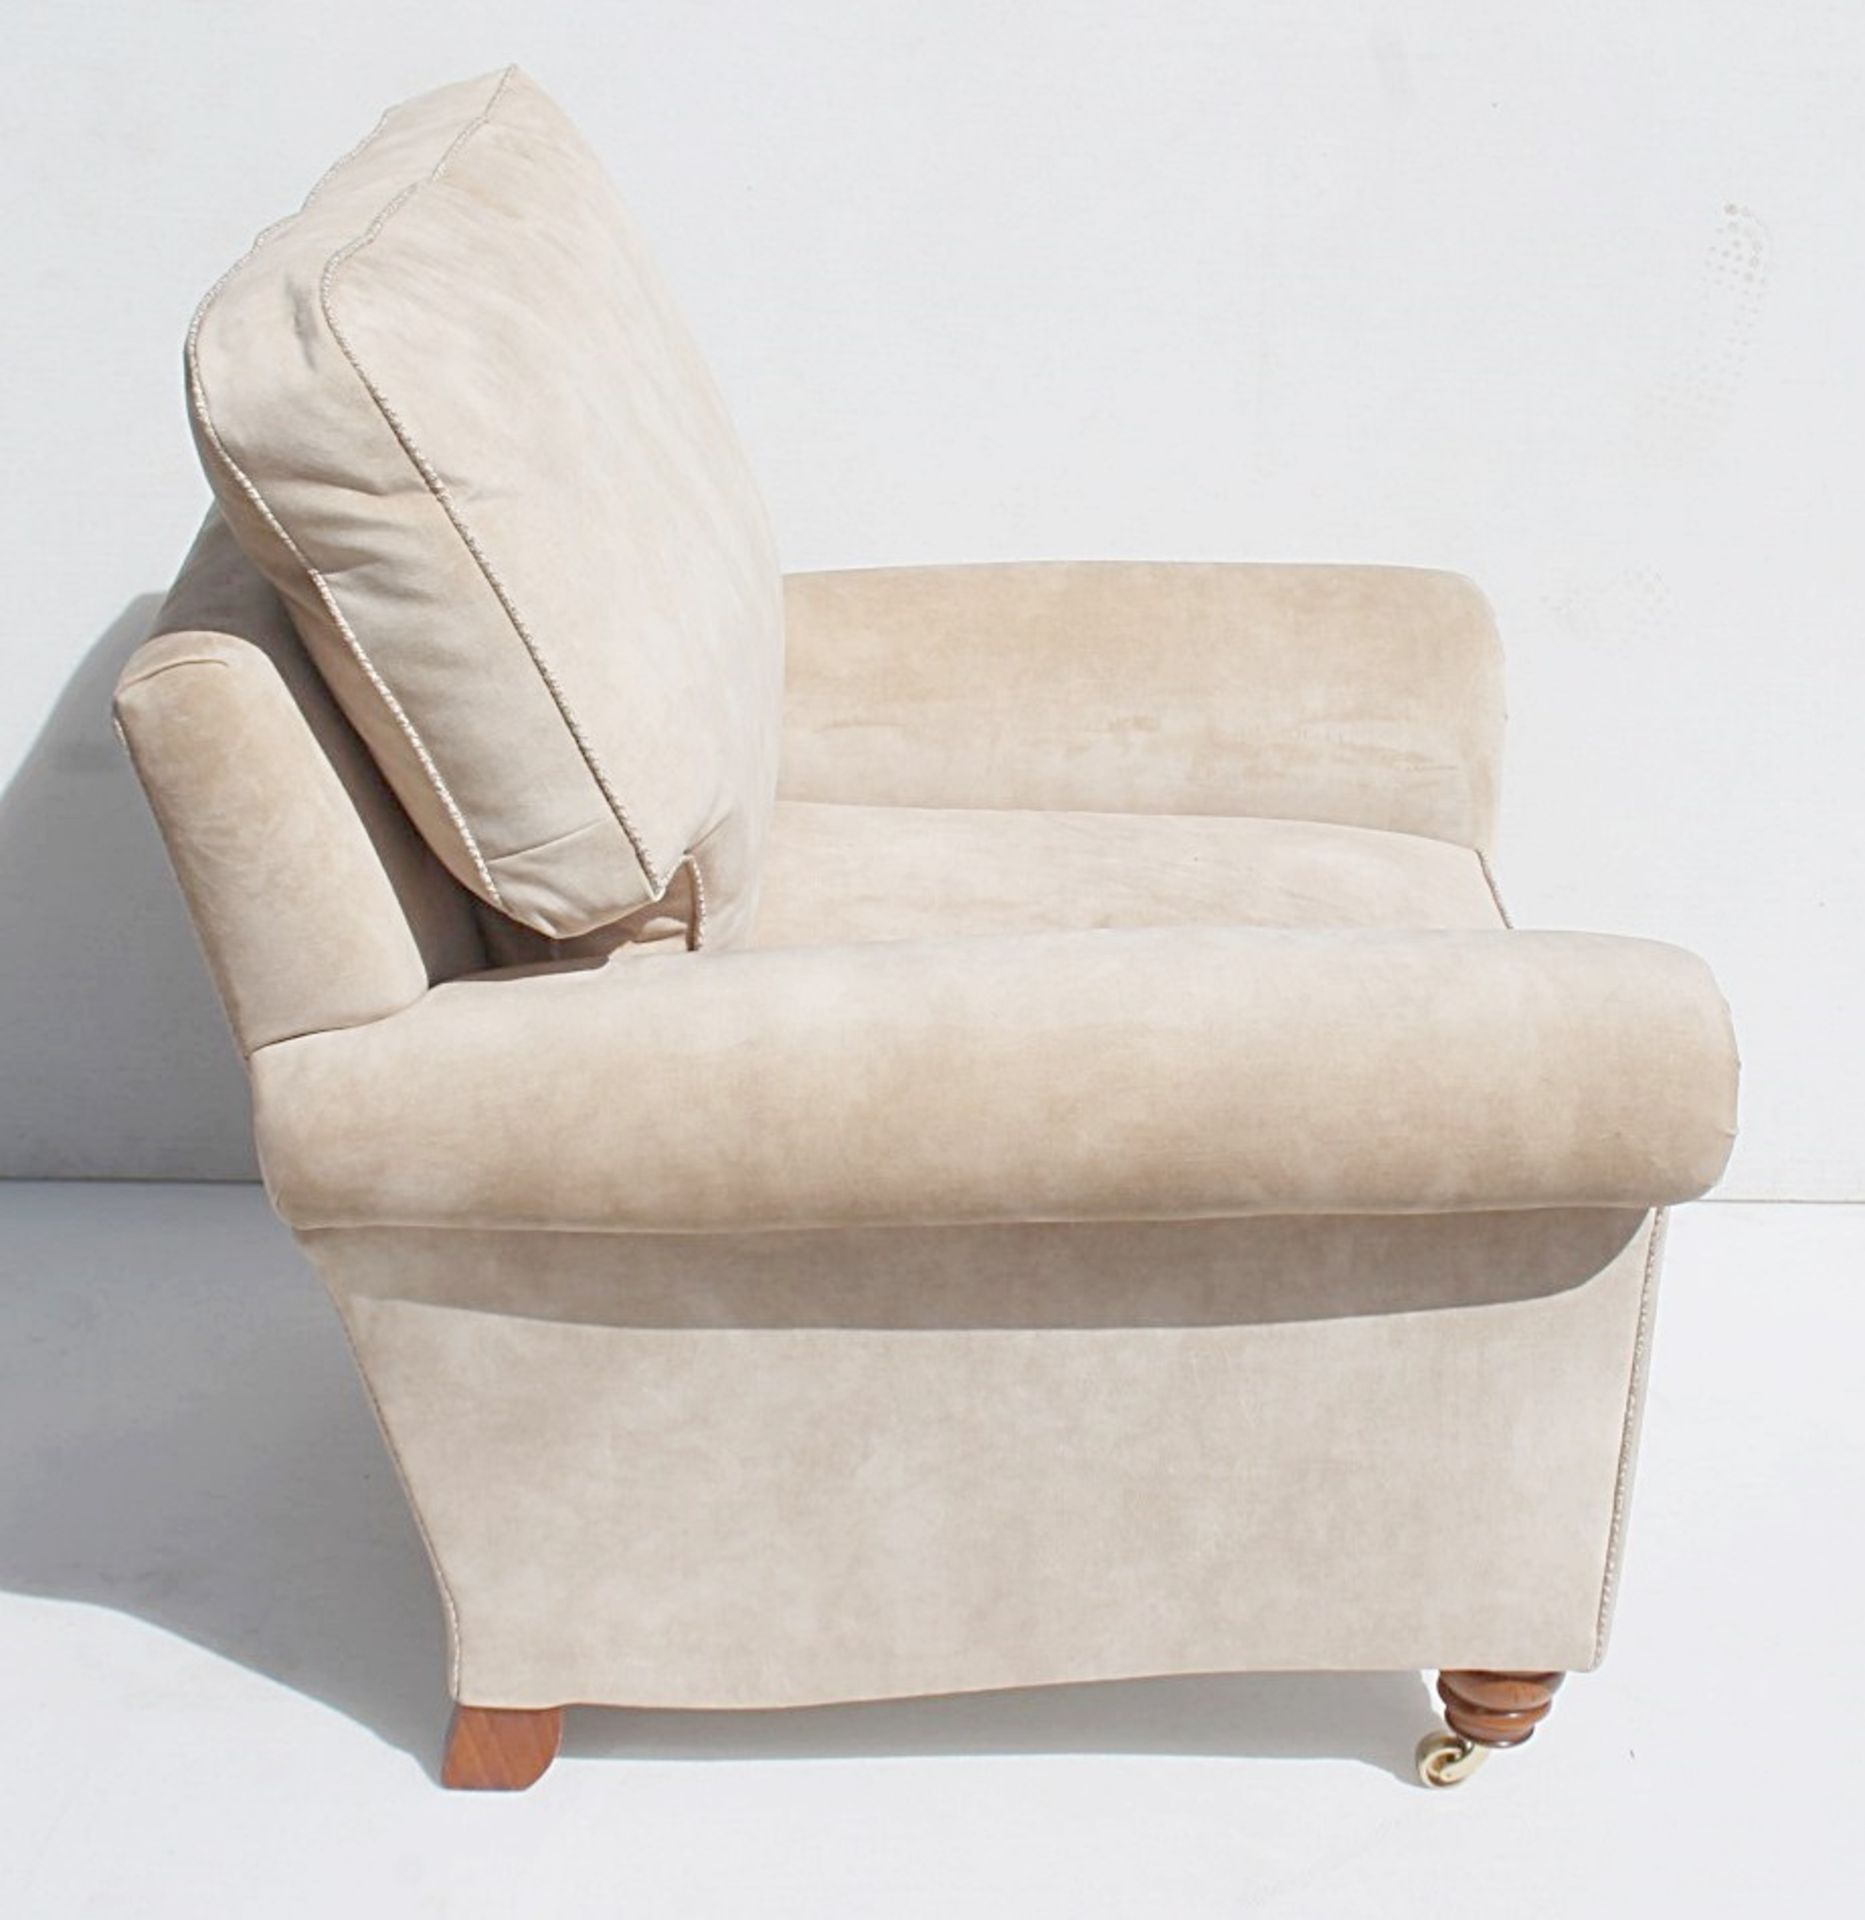 1 x DURESTA 'Belvedere' Luxury Ladies Chair Upholstered In Champagne Velvet - RRP £1,759 - Image 4 of 9